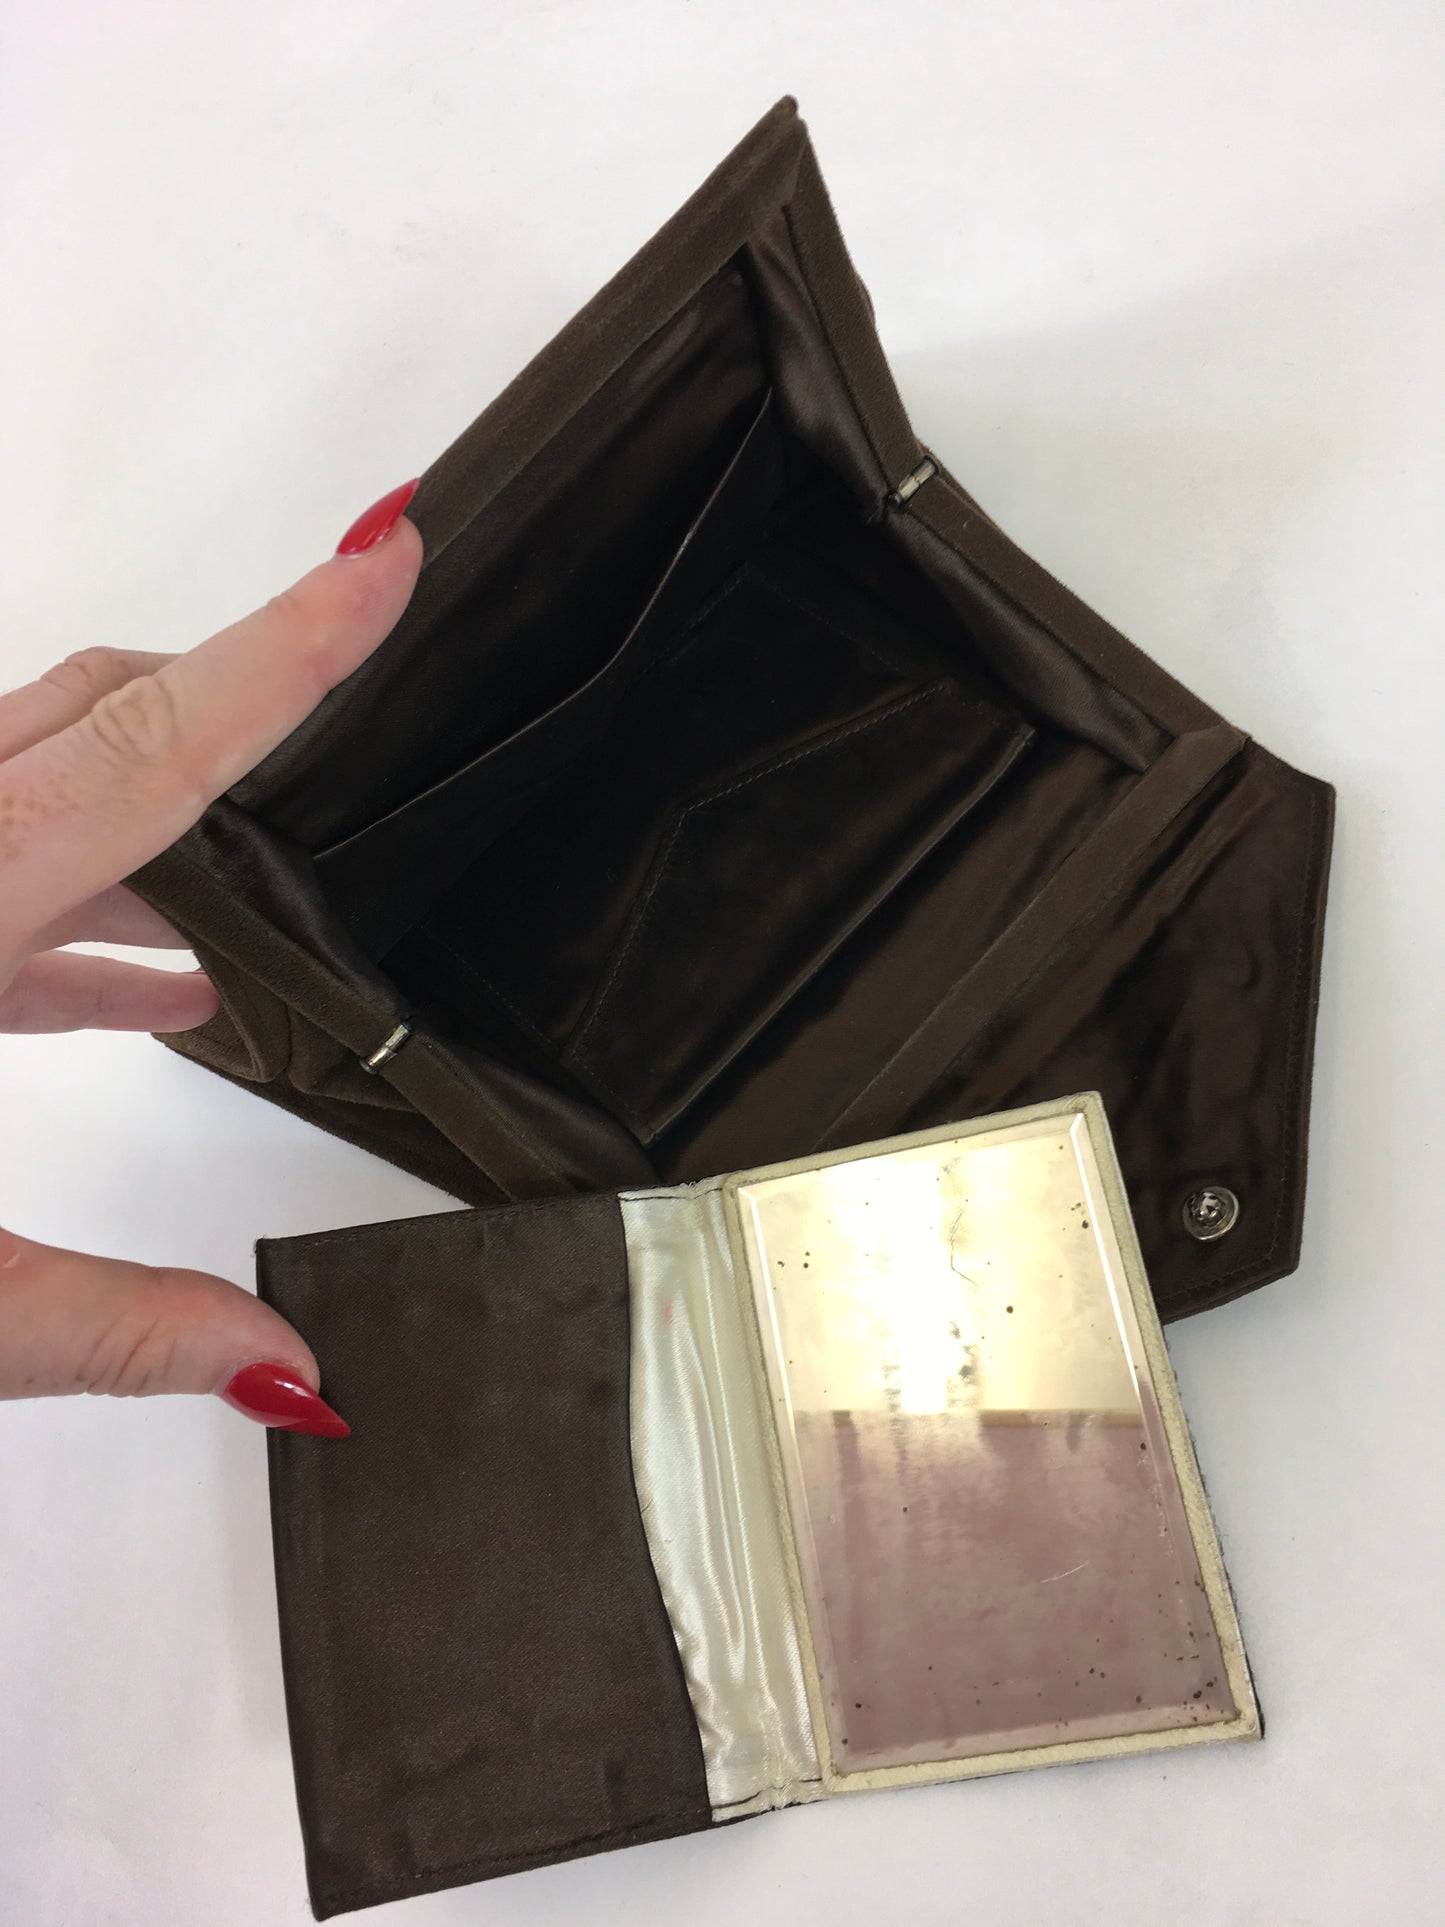 Original 1930's Exquisite Suede Evening Handbag - In Chocolate Brown Suede with Paste Embellishment